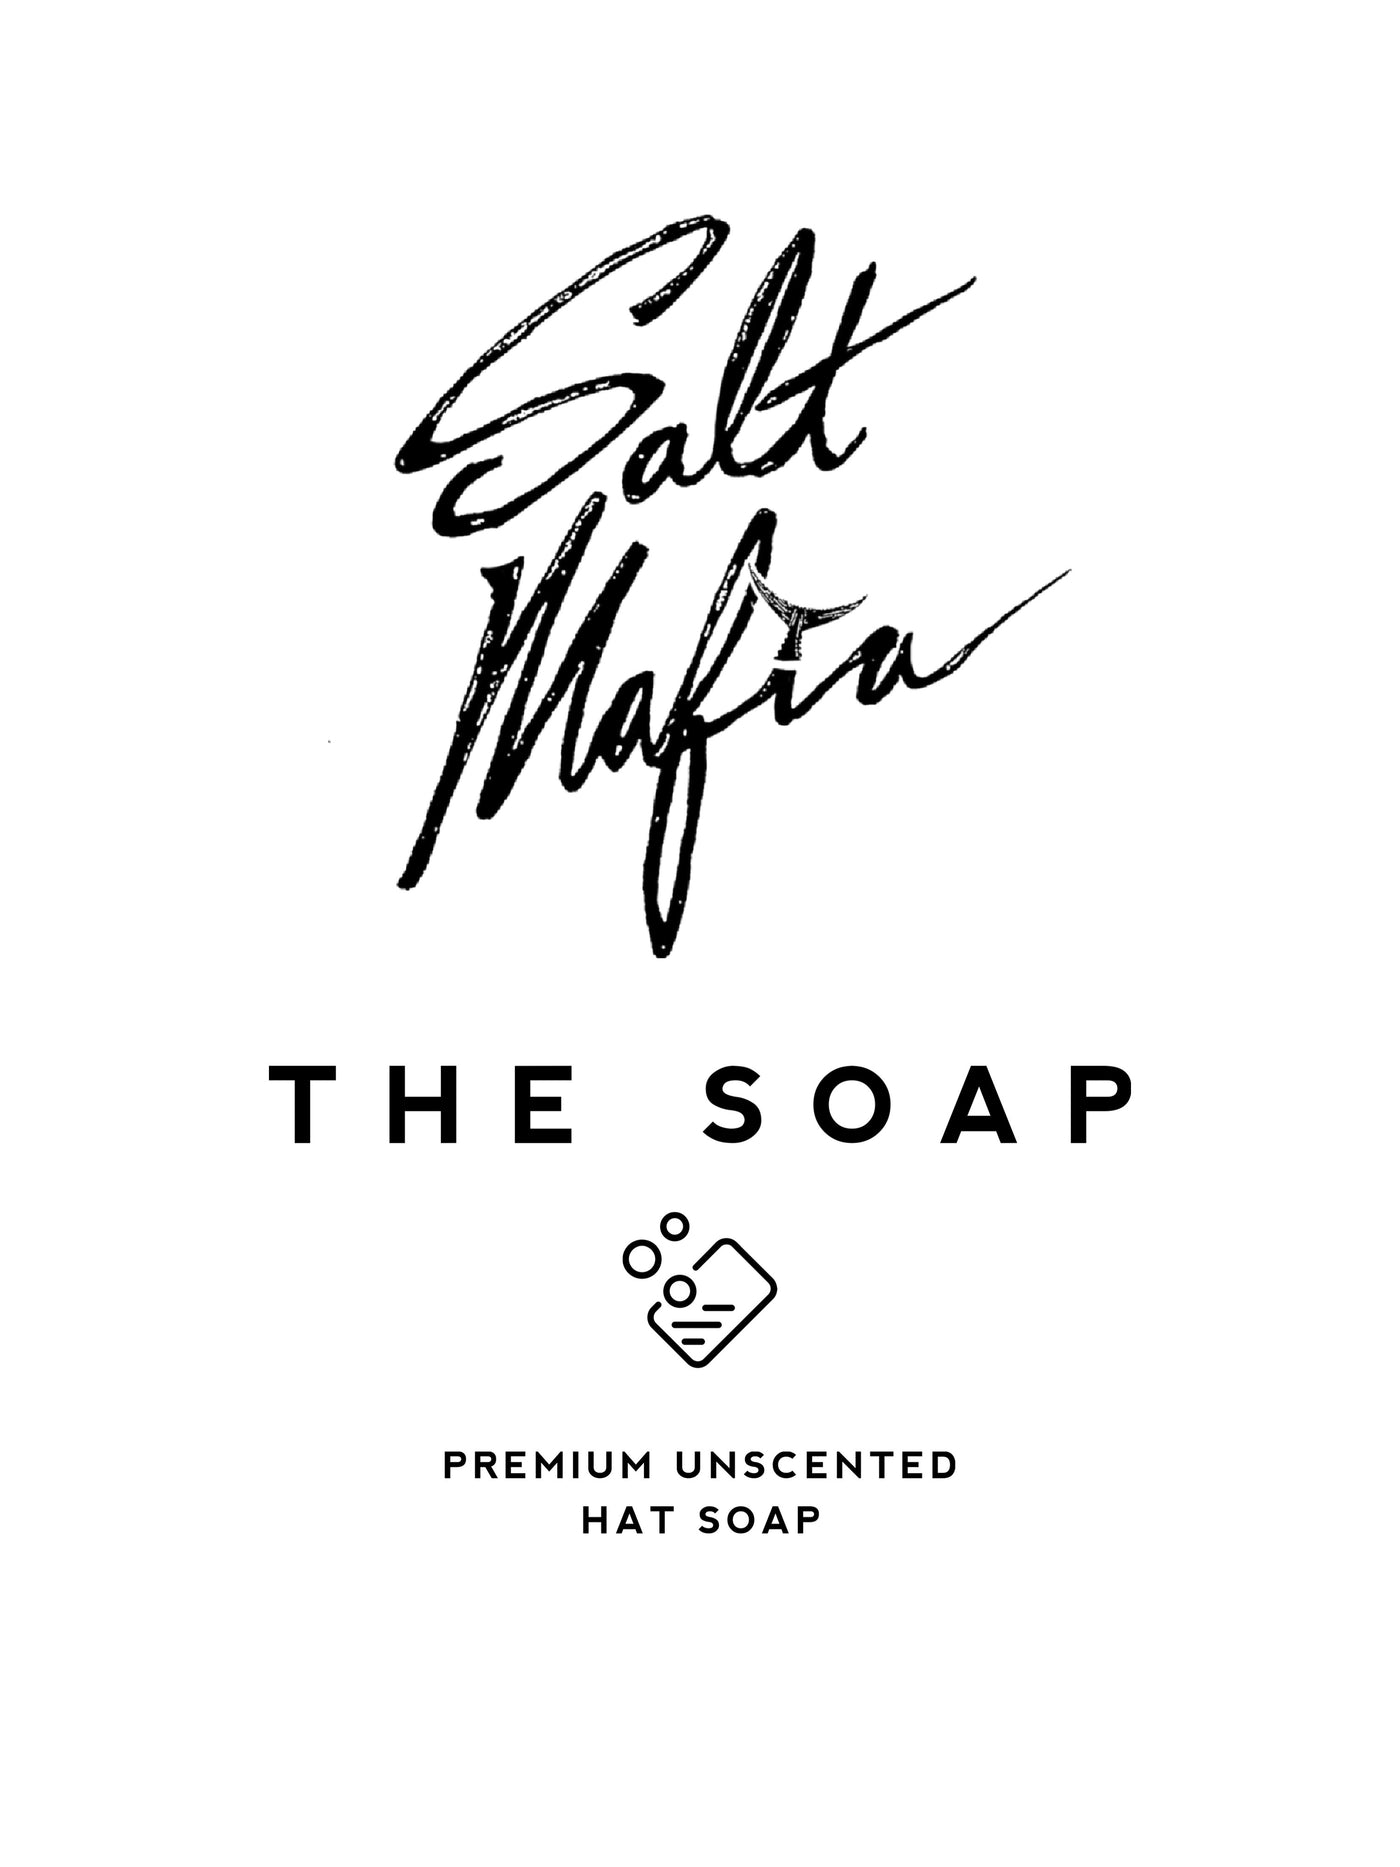 THE HAT SOAP – Salt Mafia